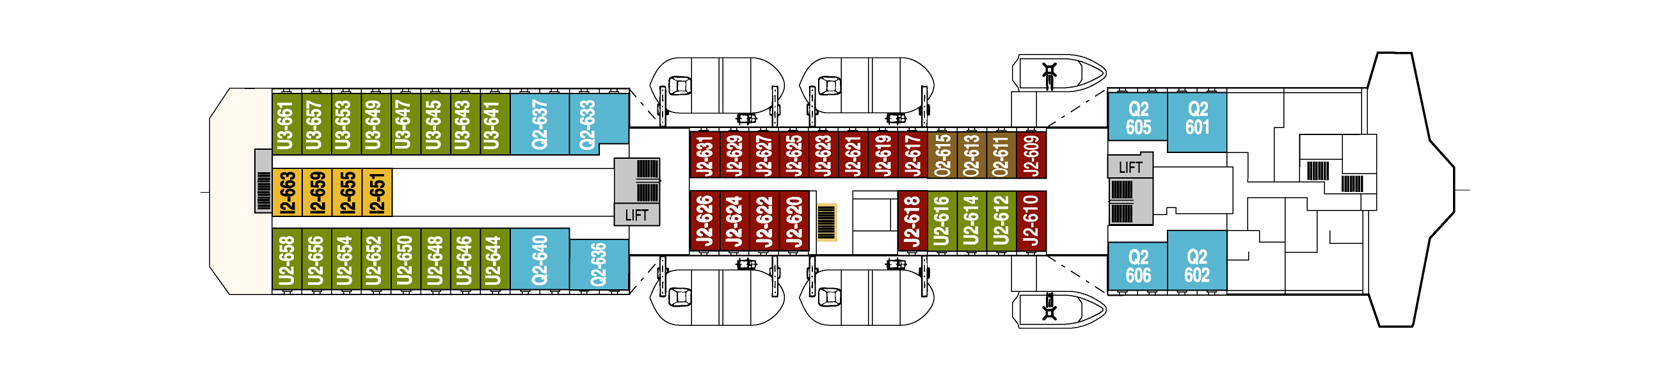 1548636383.6366_d272_Hurtigruten MS Nordkapp Deck Plans Deck 6.png